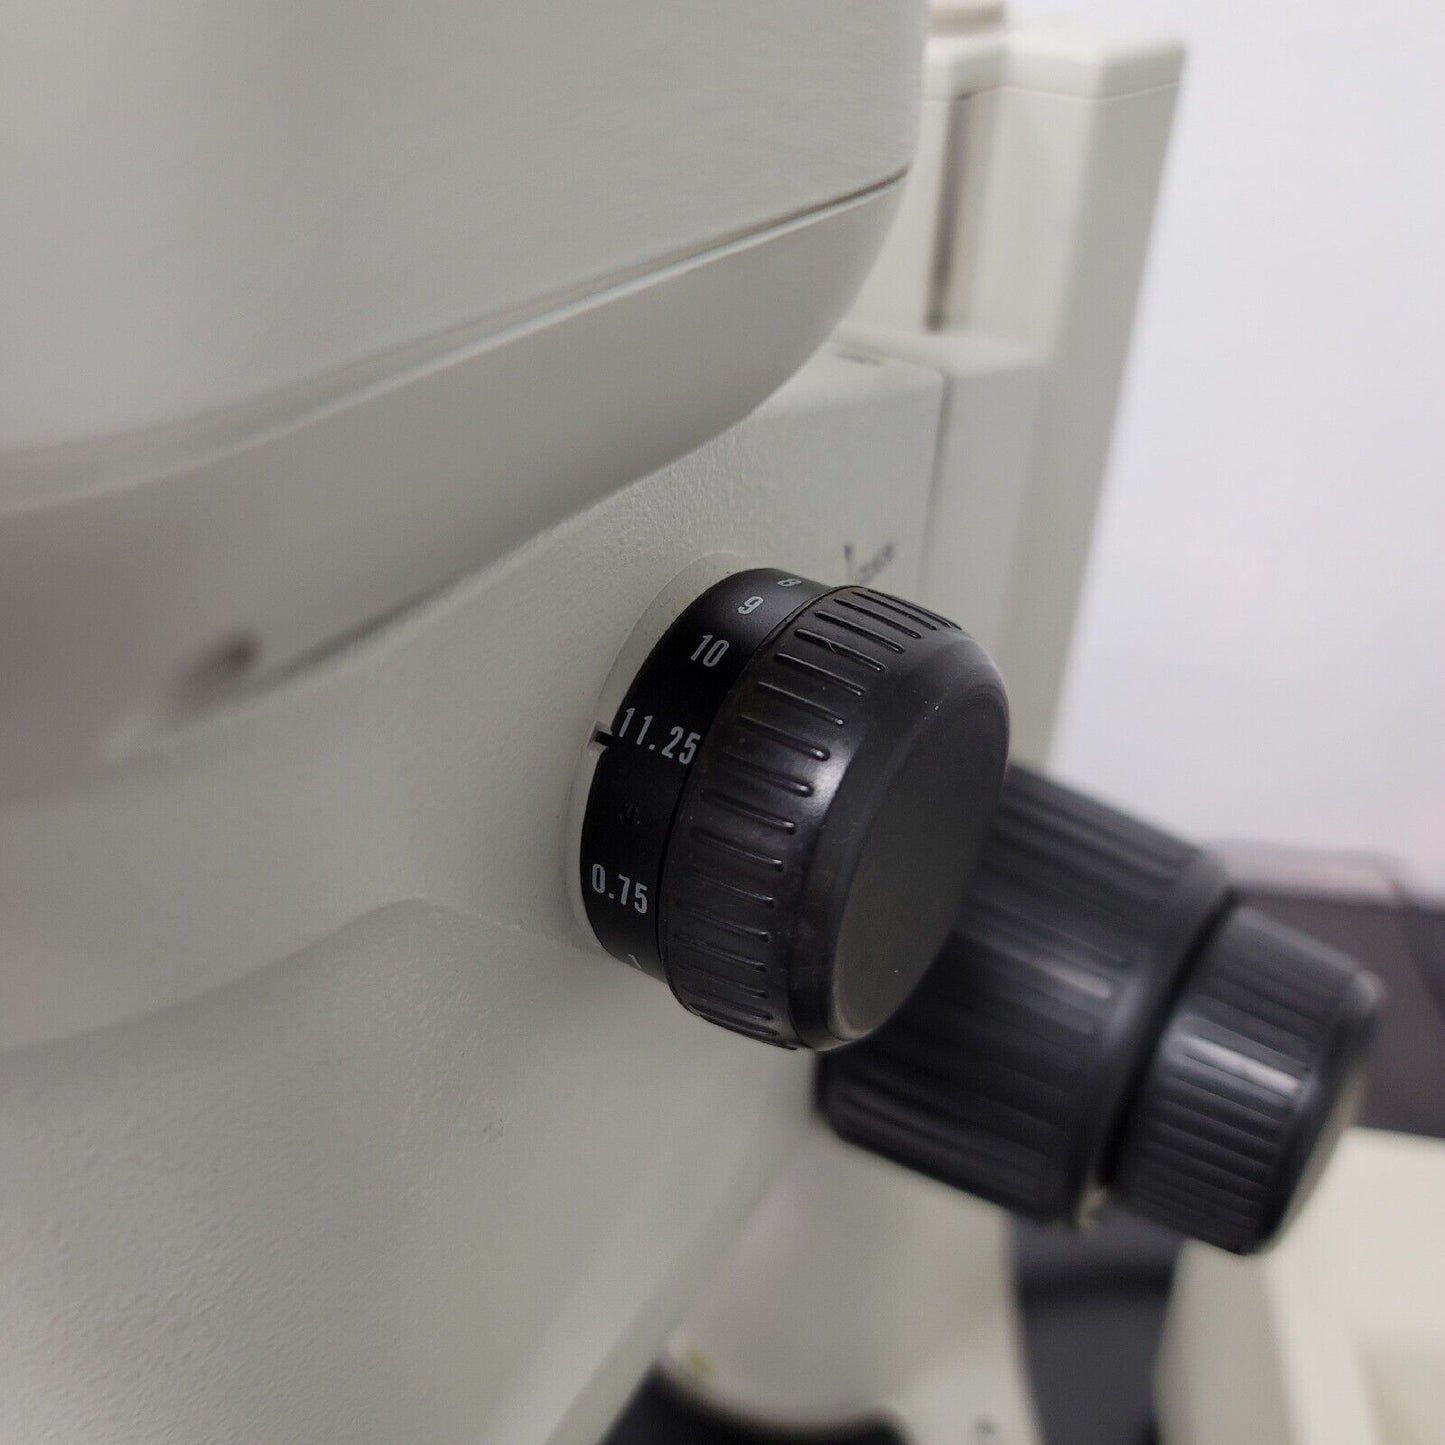 Nikon Microscope SMZ1500 with Okolab Heated Stage - microscopemarketplace